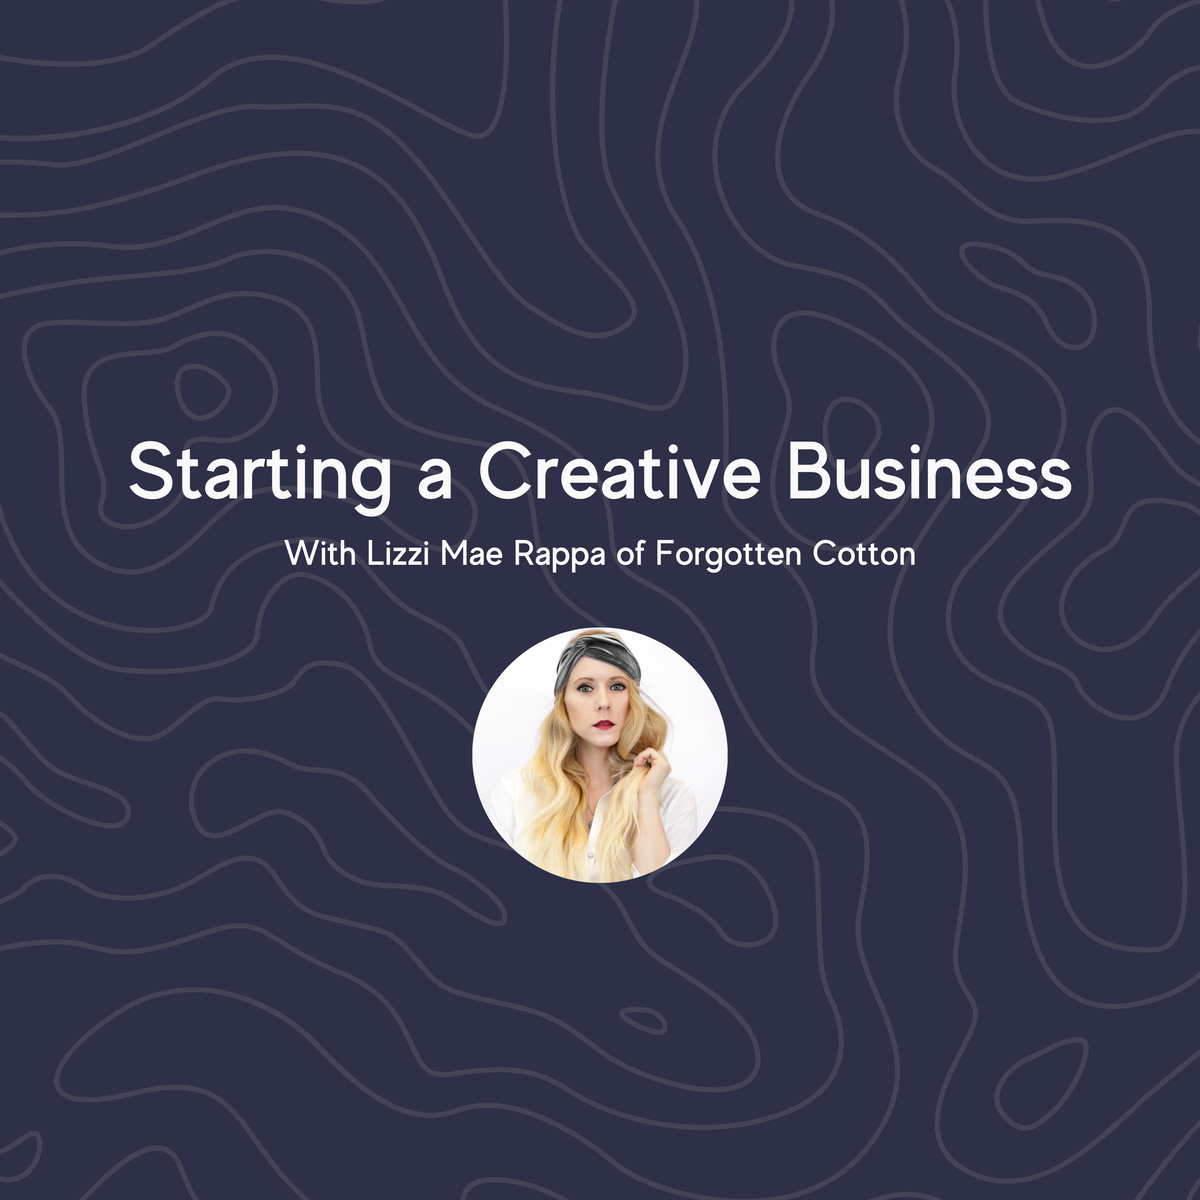 Starting a Creative Business with Lizzi Mae Rappa